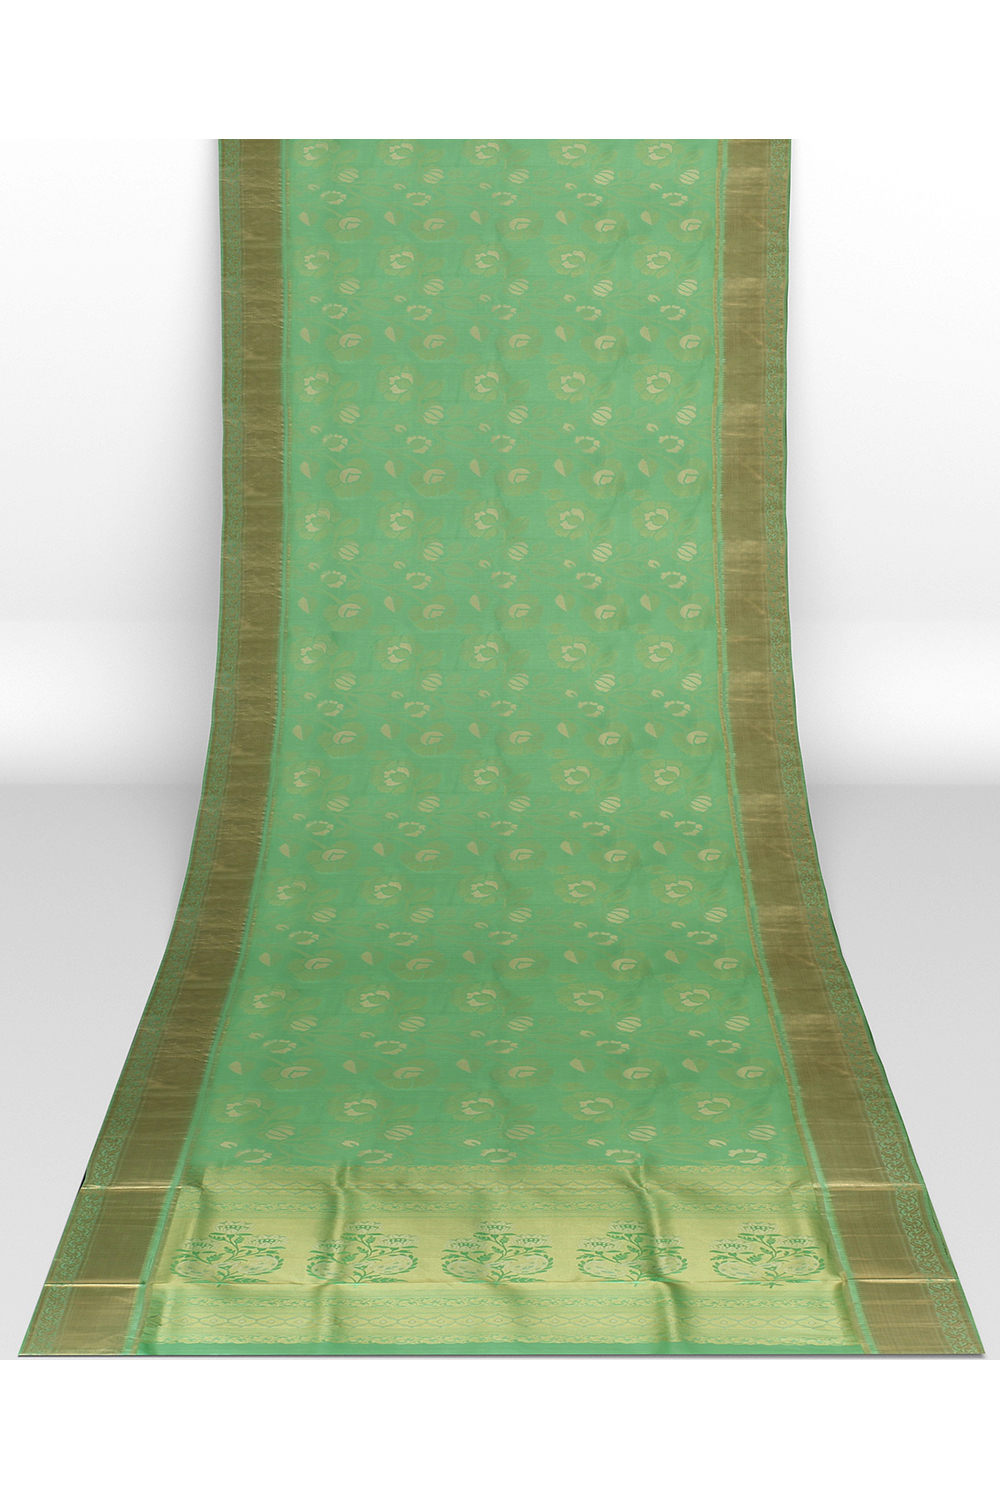 Pista Green Kanjivaram Silk Saree